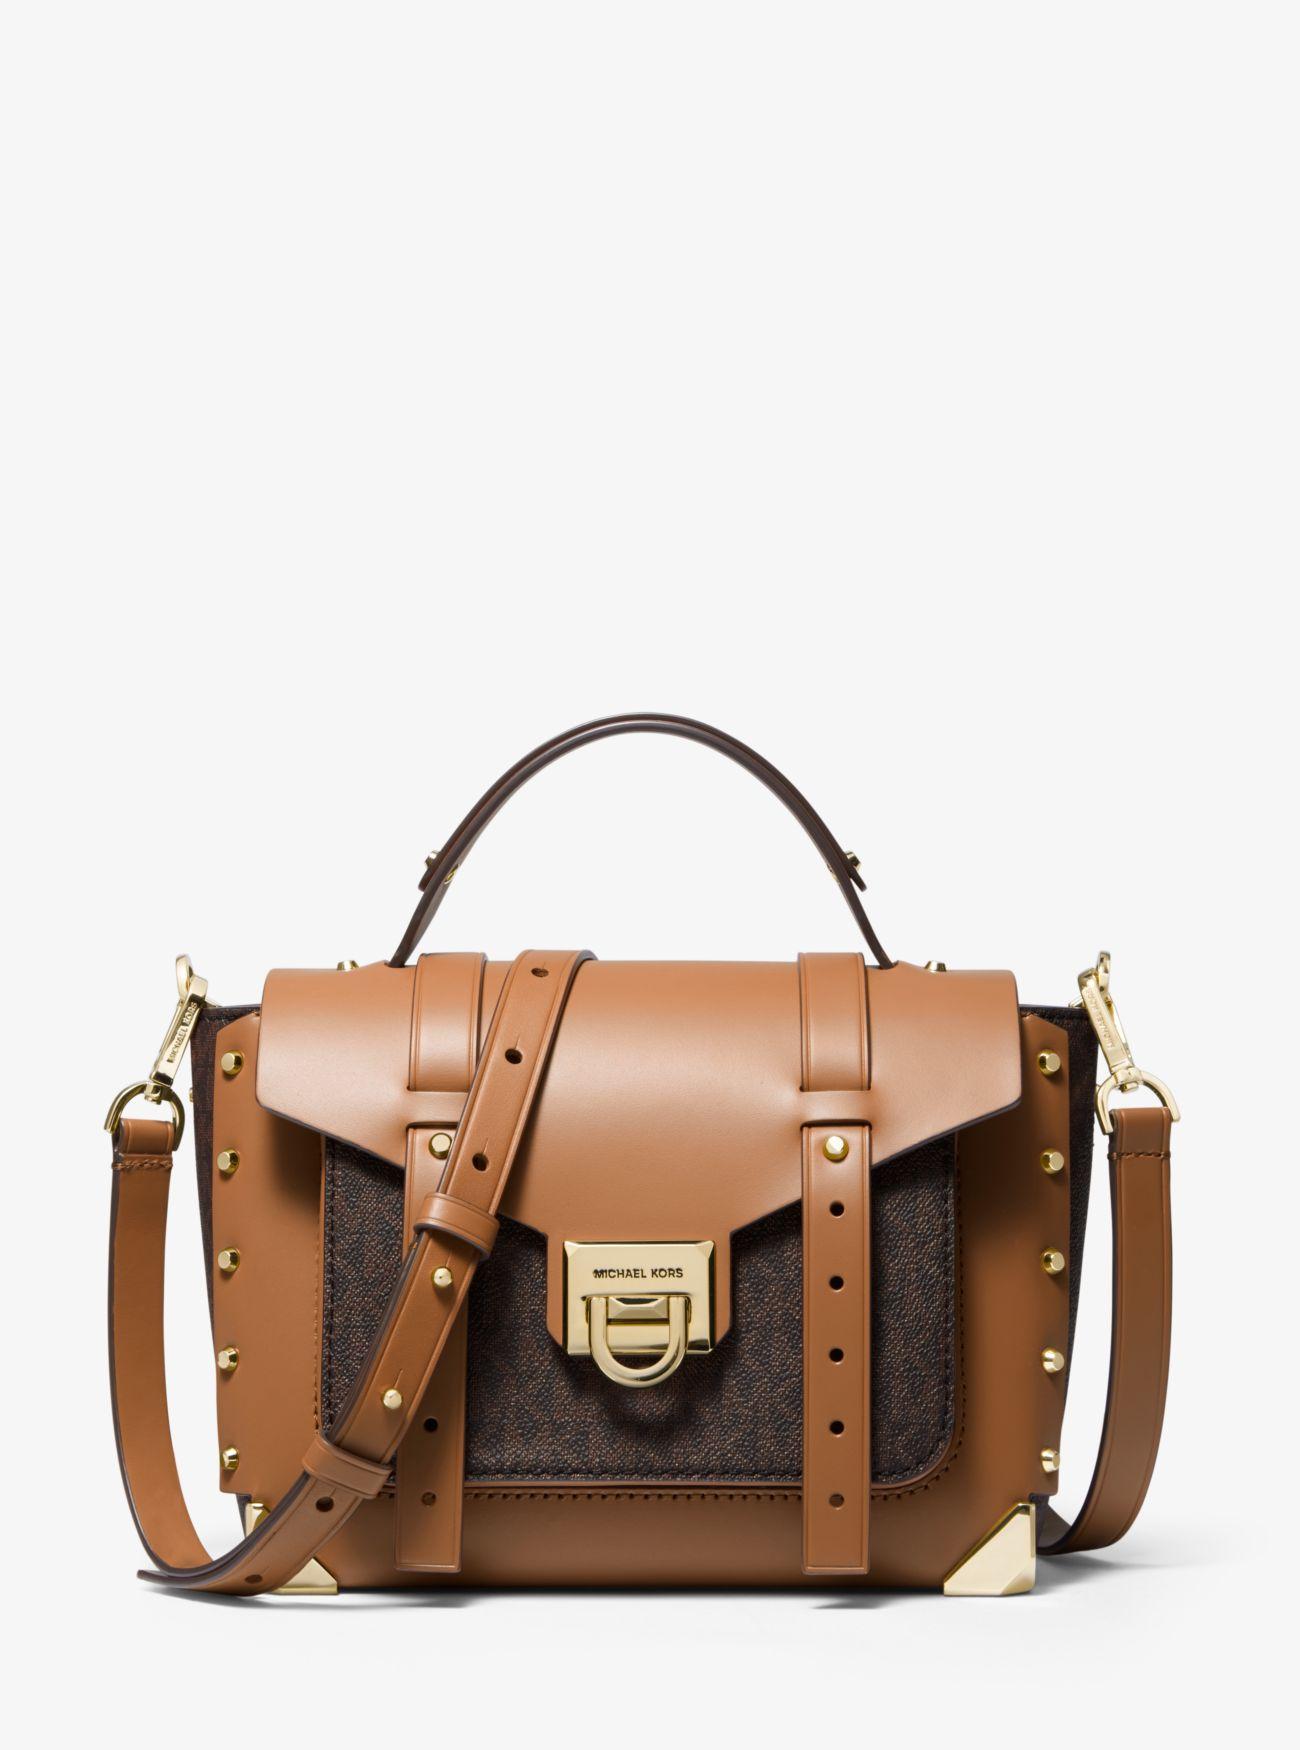 brown leather MK bag